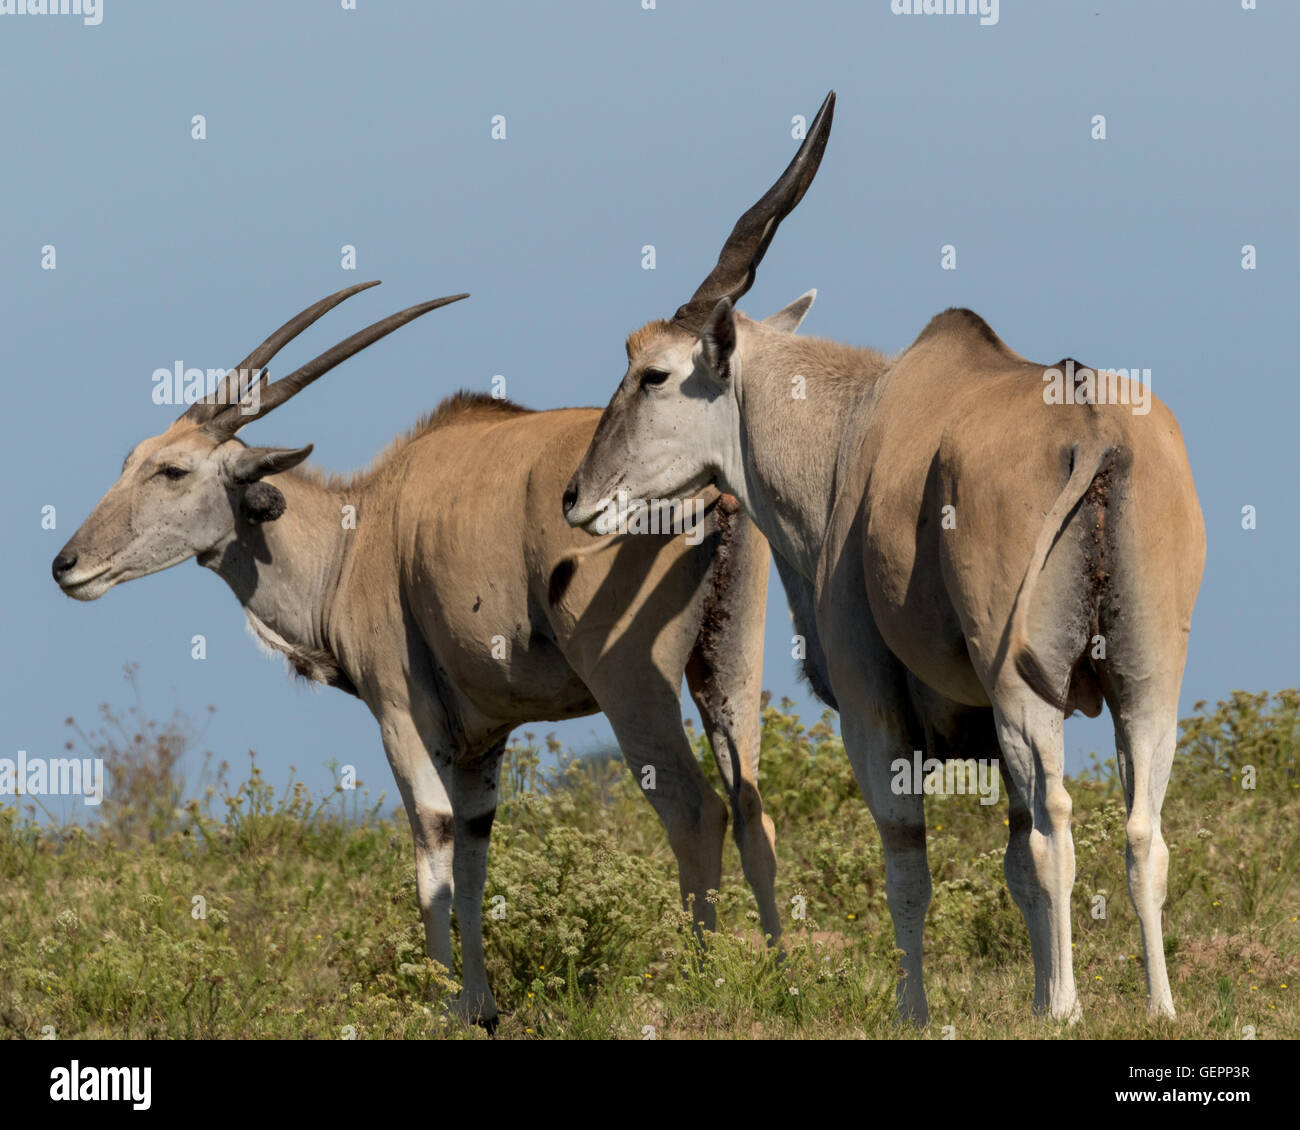 Common Eland (Taurotragus oryx) Plagued With Ticks Stock Photo